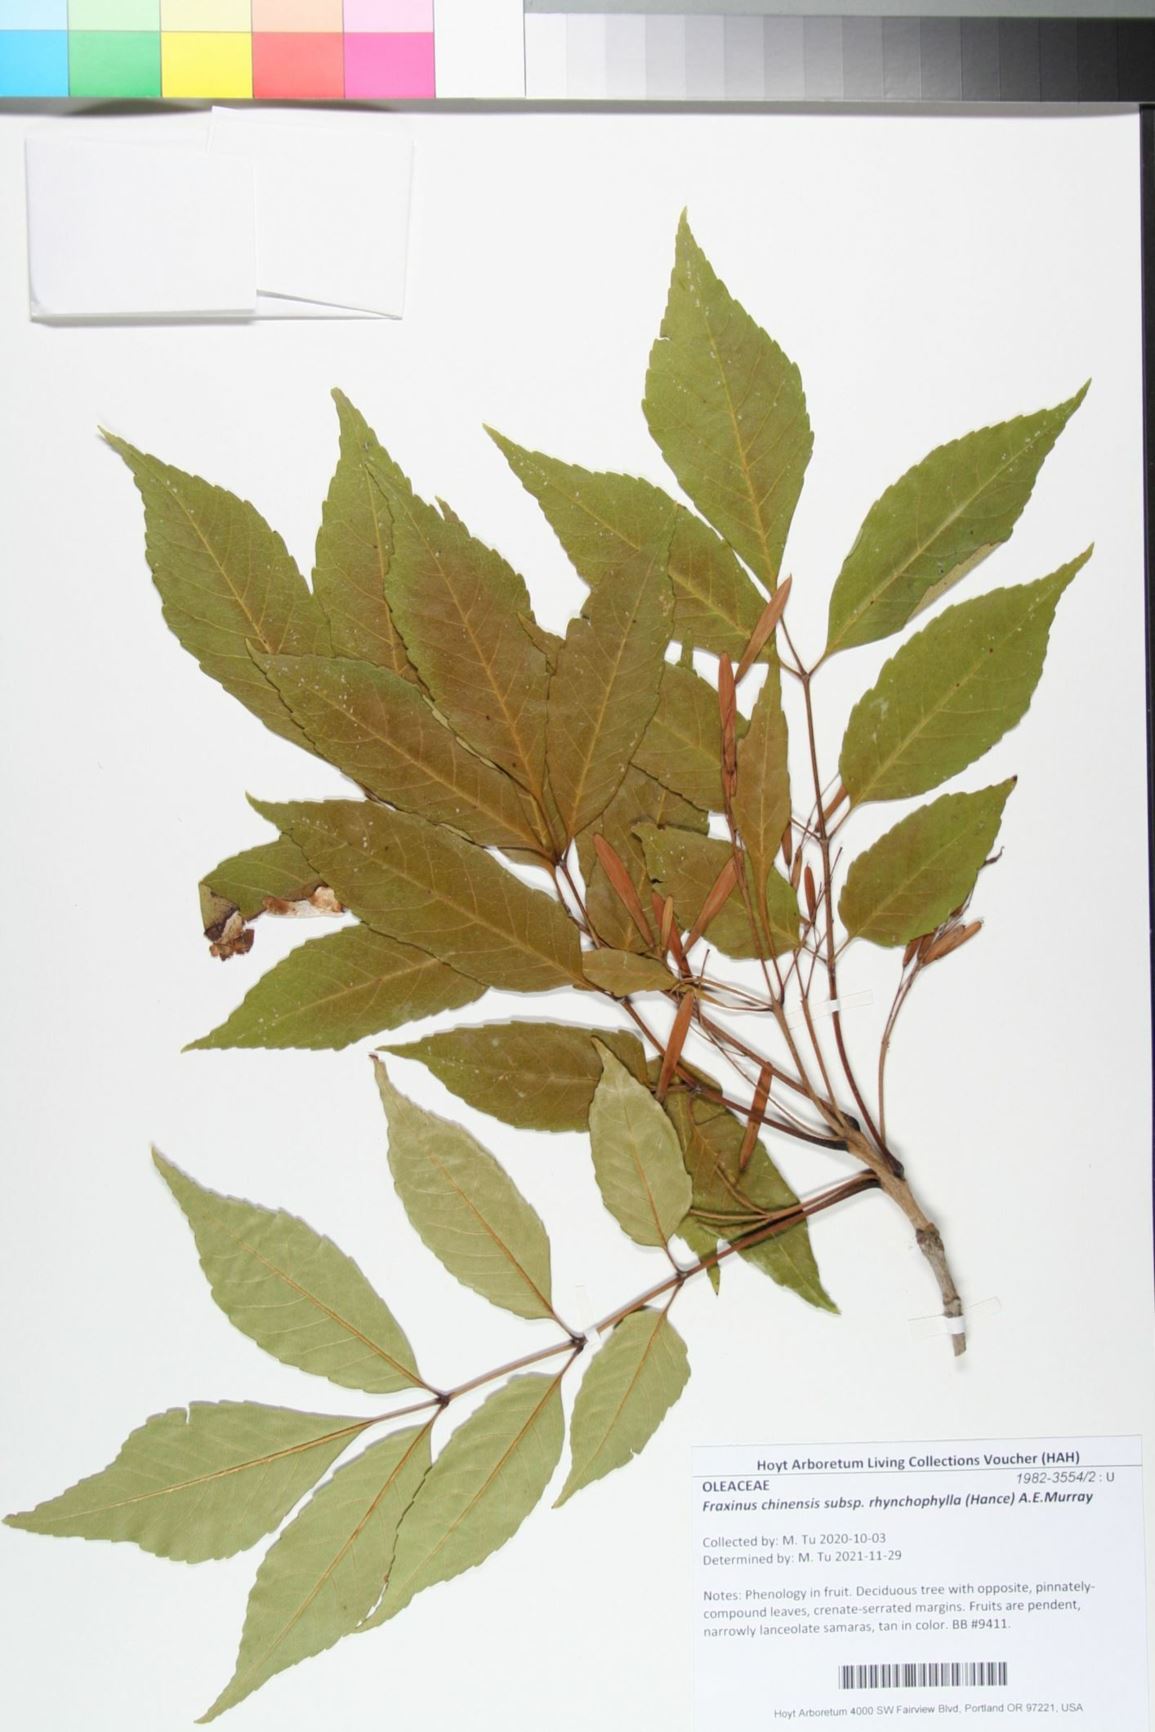 Fraxinus chinensis subsp. rhynchophylla